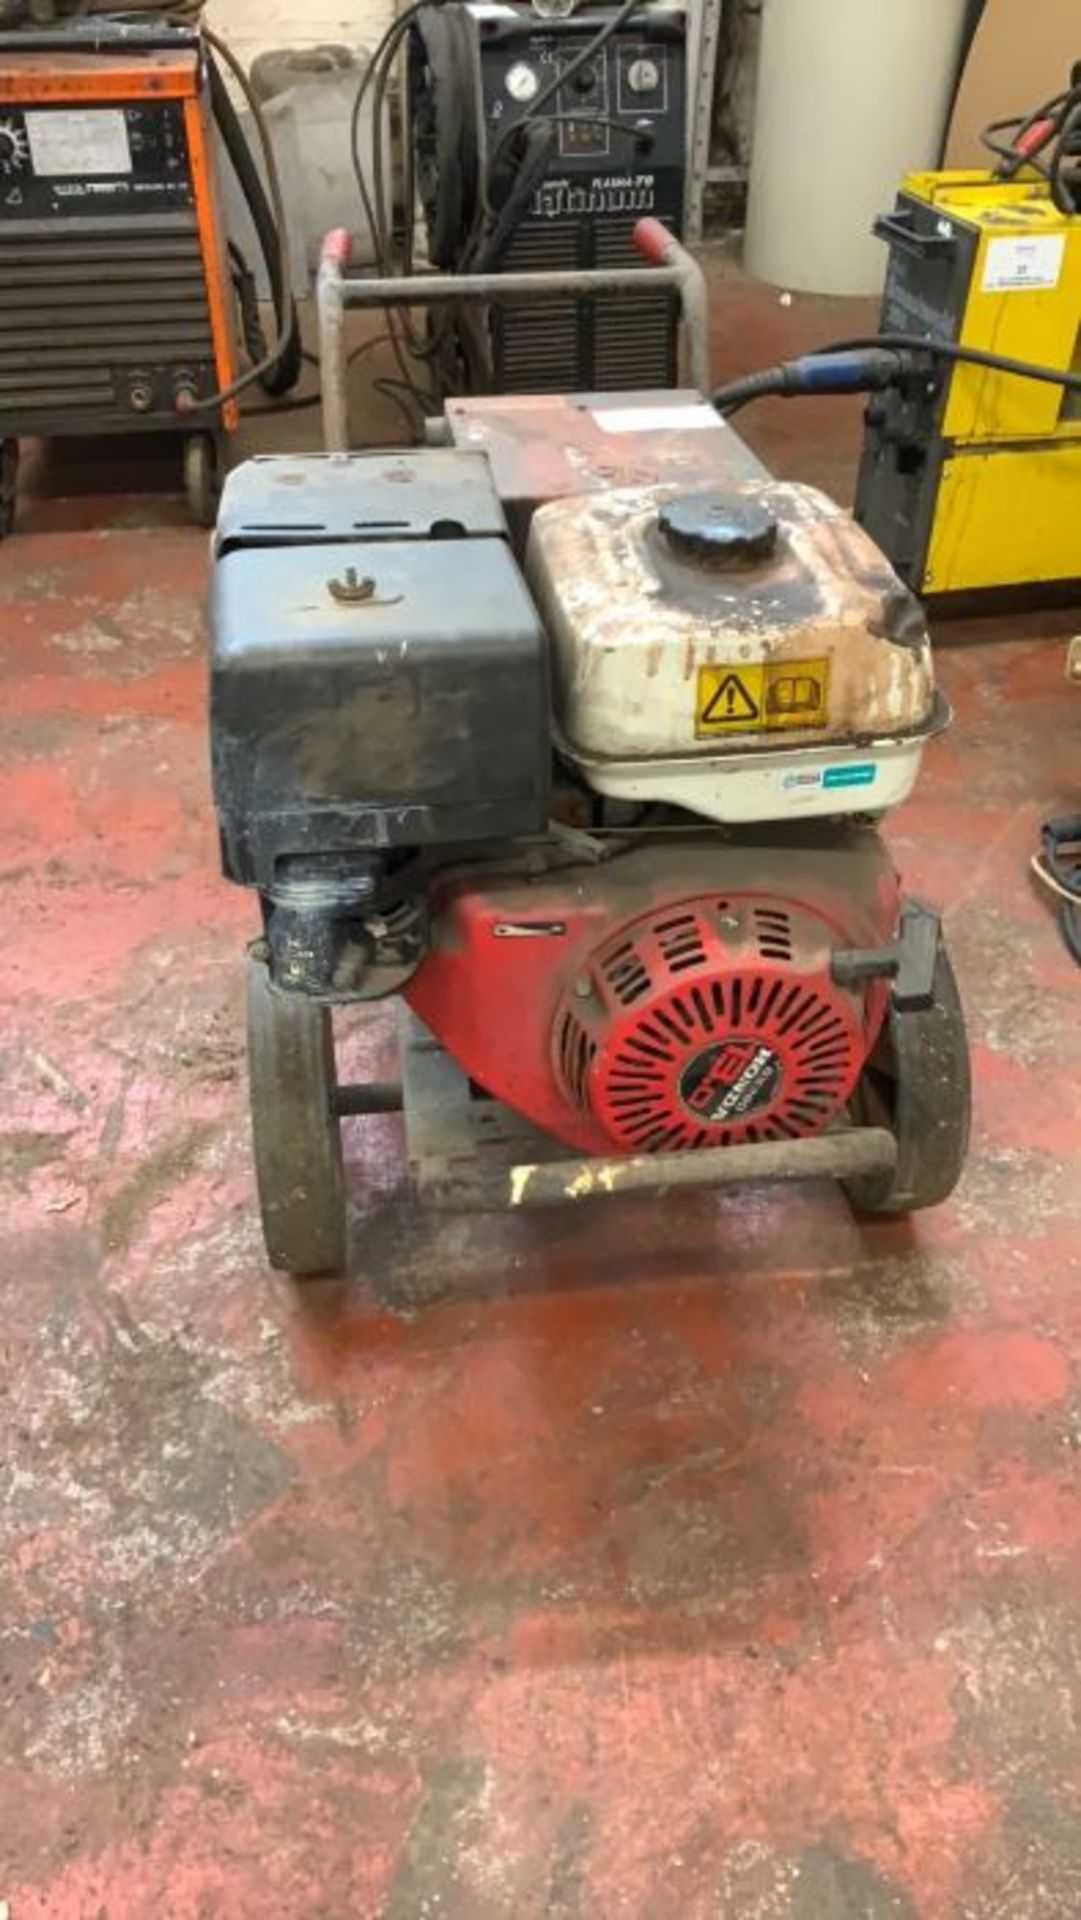 Clarke Generator Welder (Spares or Repair- Unsure if this item is operational)